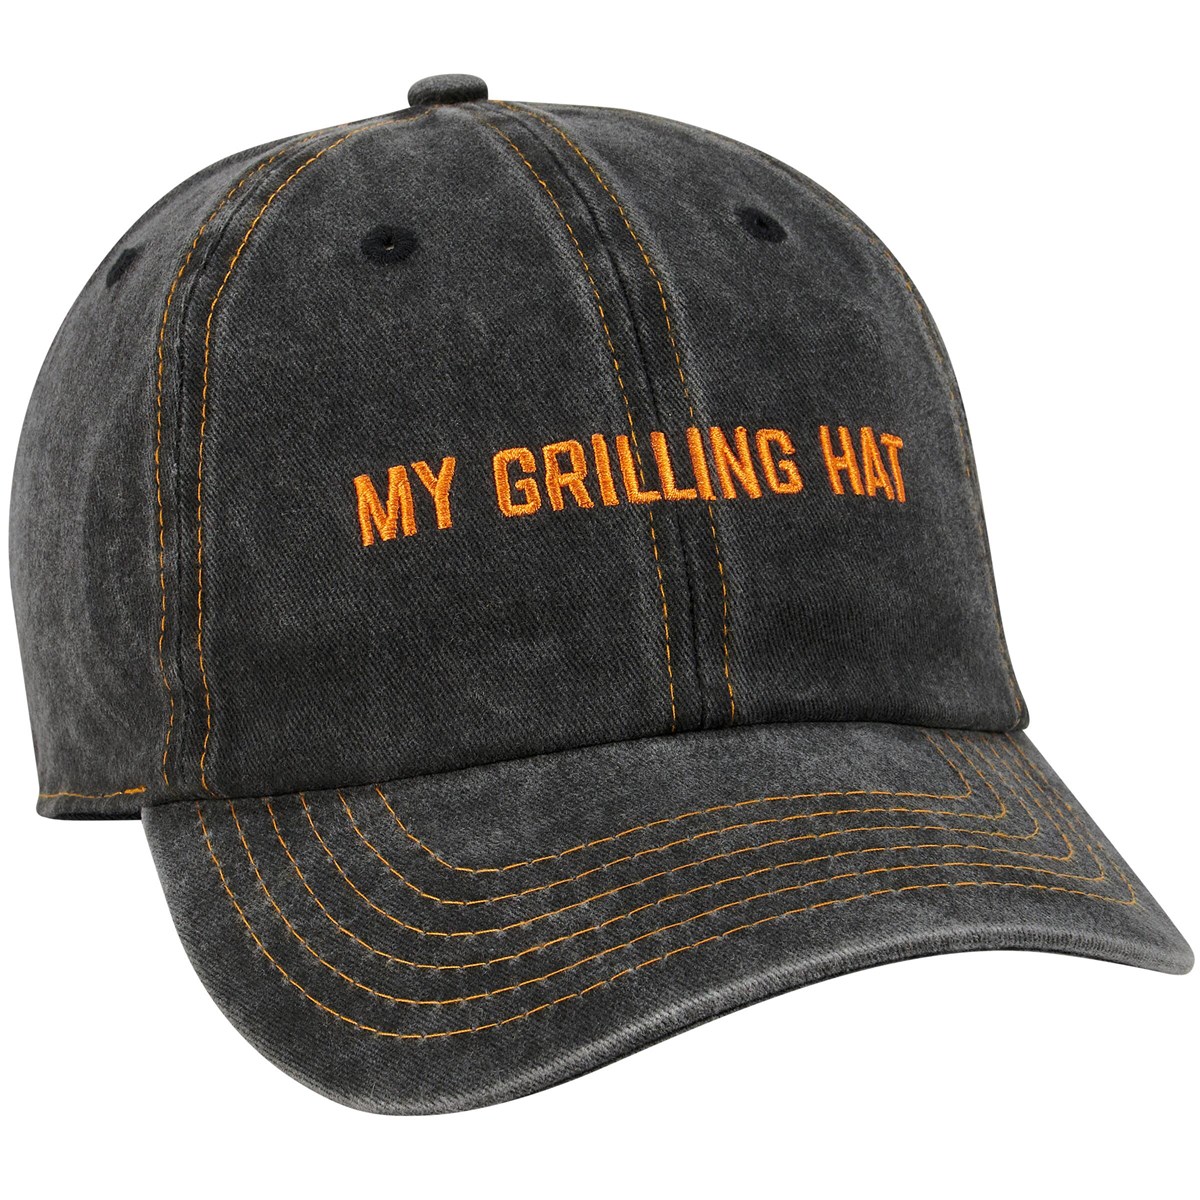 My Grilling Hat Baseball Cap - Cotton, Metal